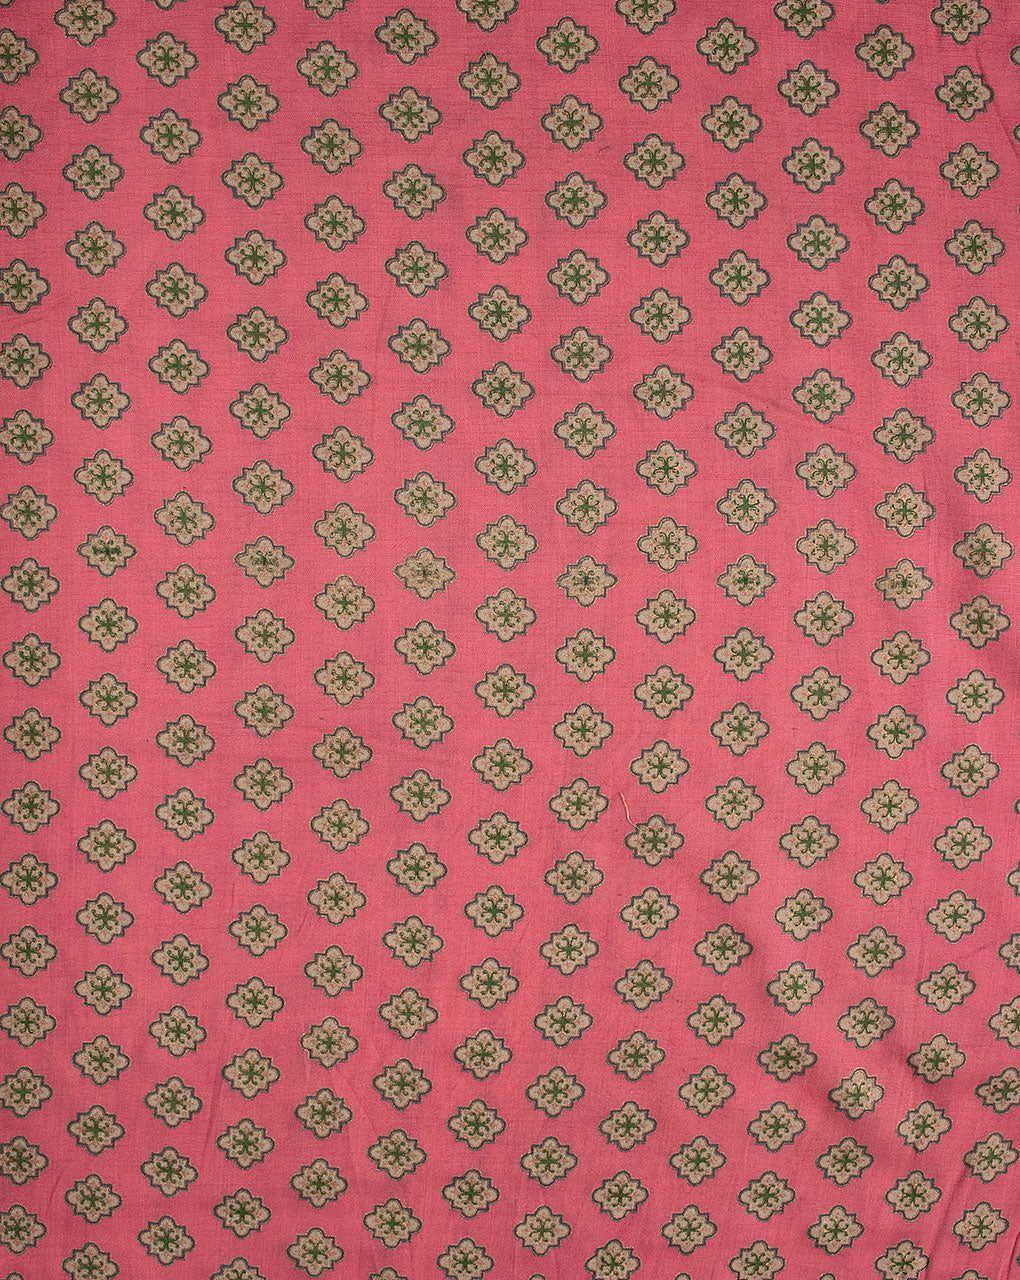 Foil Screen Print Slub Rayon Fabric - Fabriclore.com